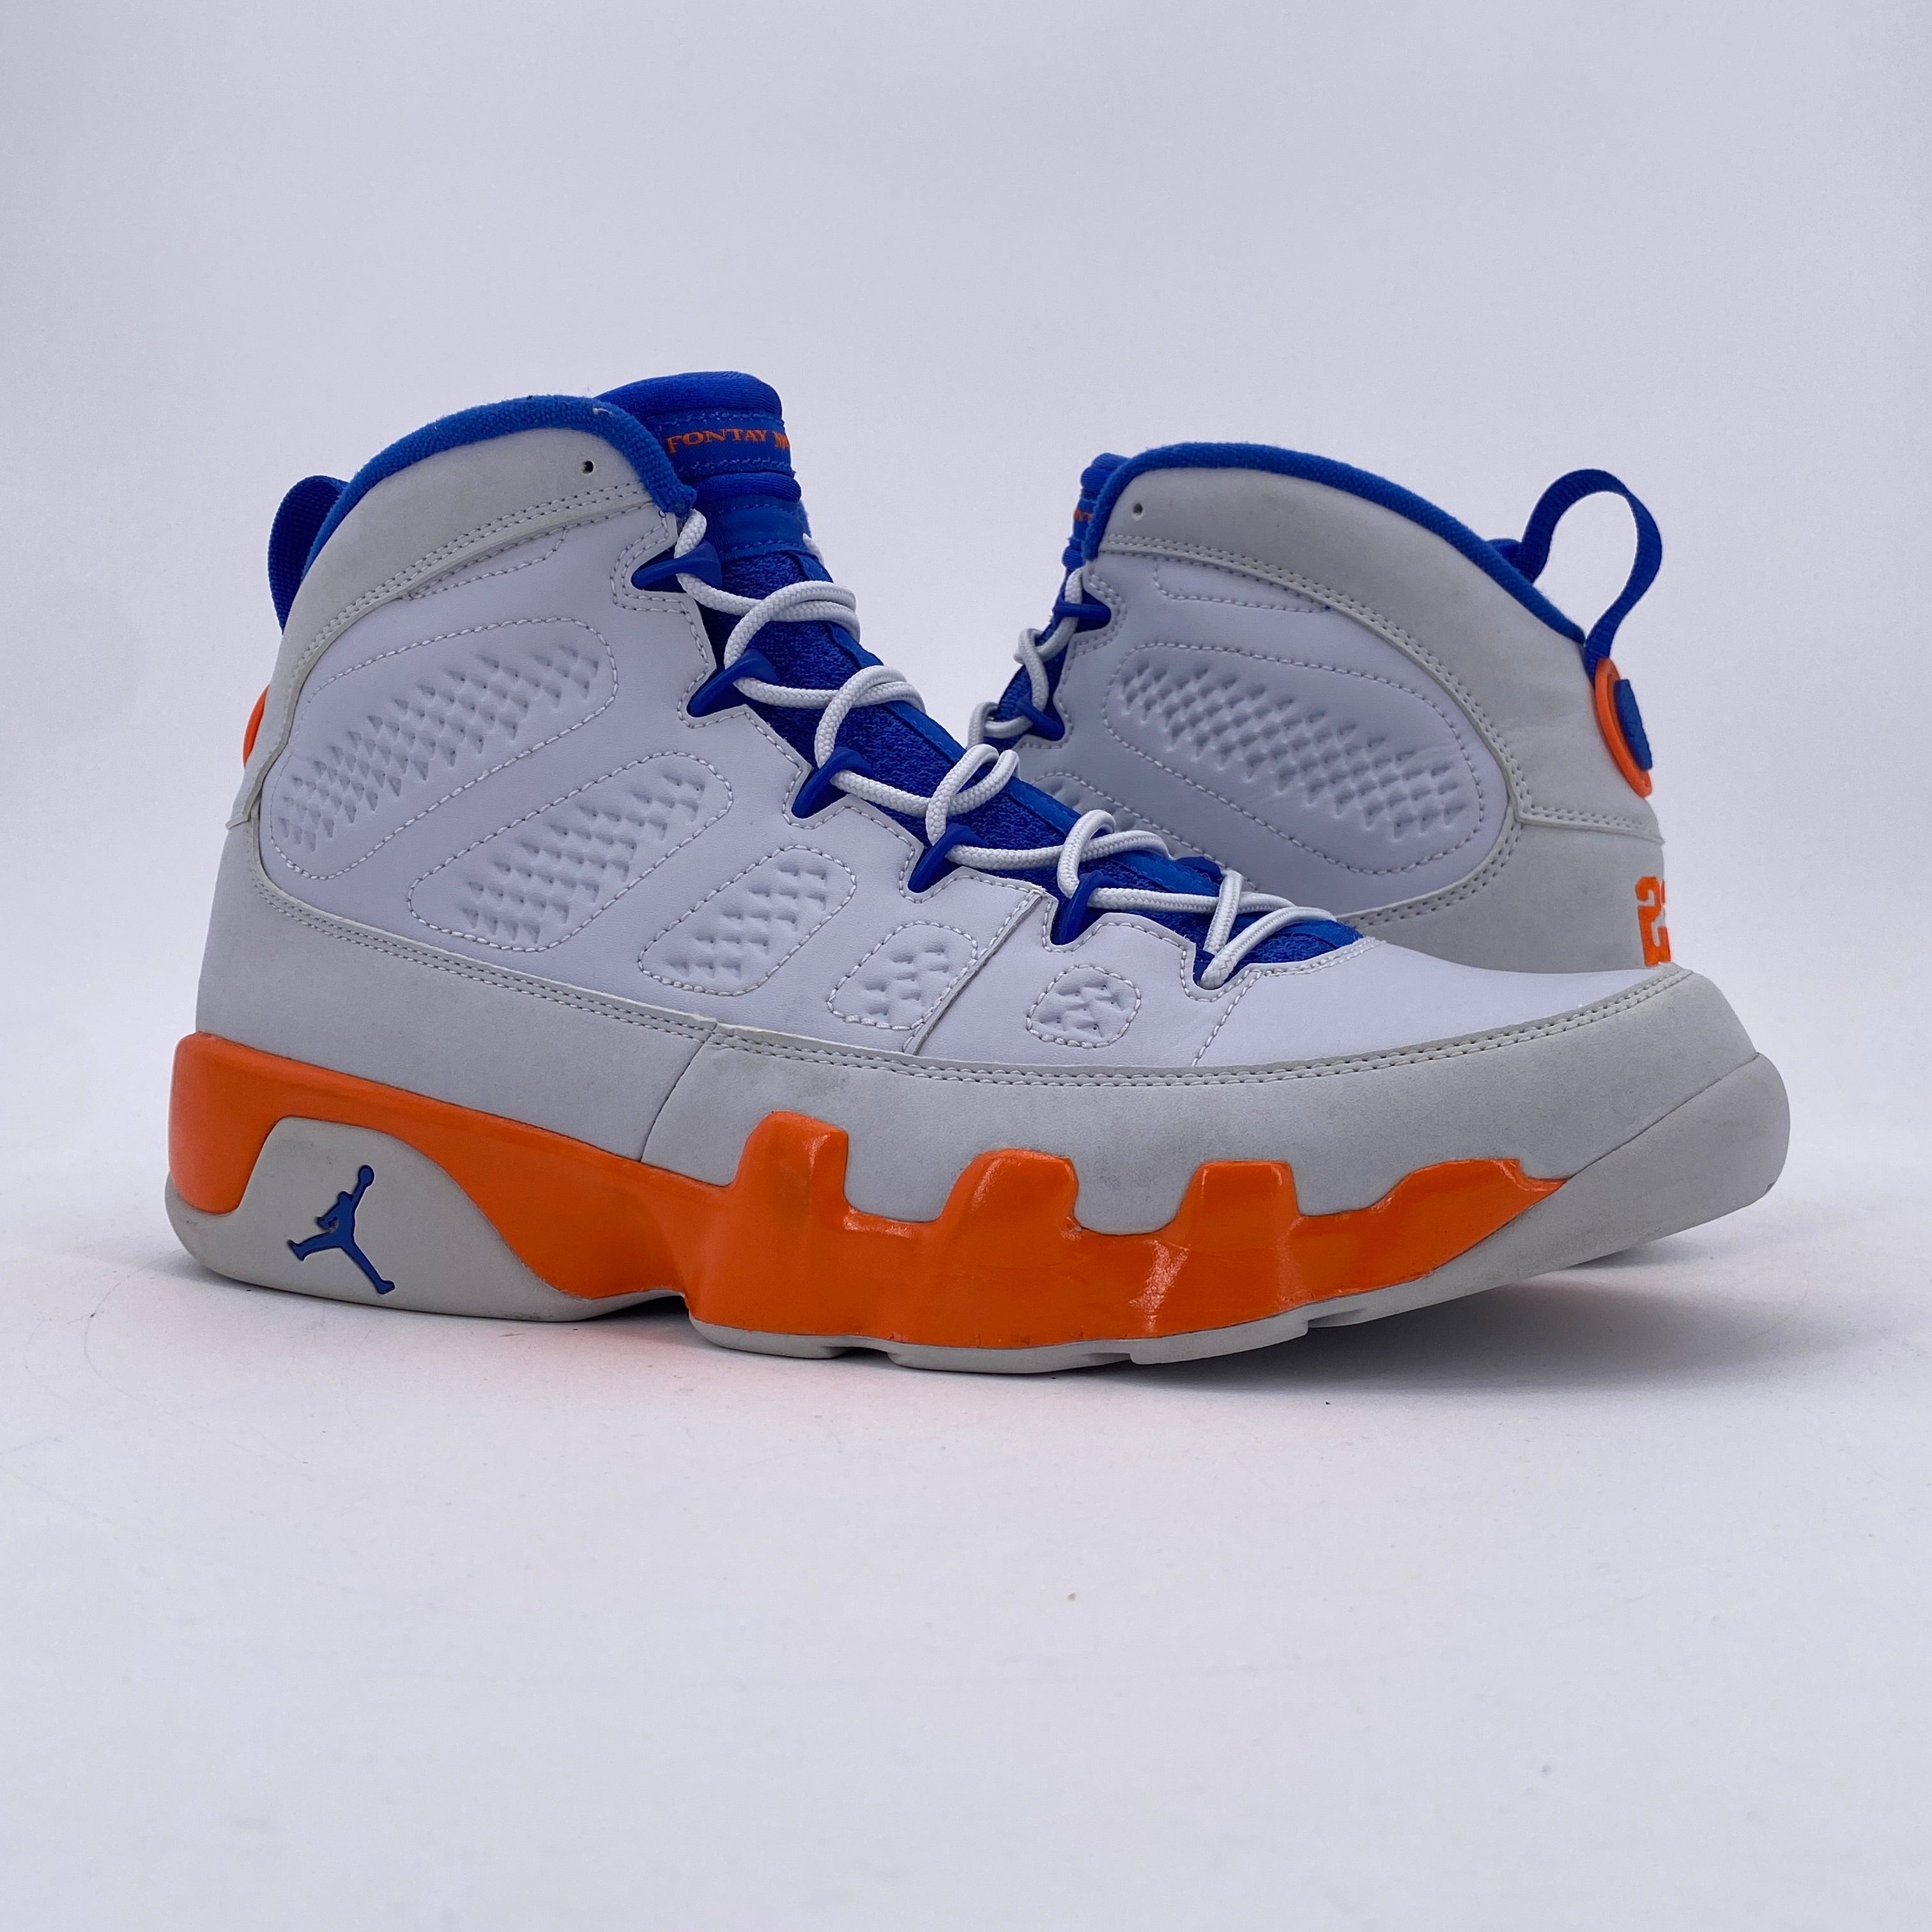 Air Jordan 9 Retro &quot;Knicks&quot; 2012 Used Size 12